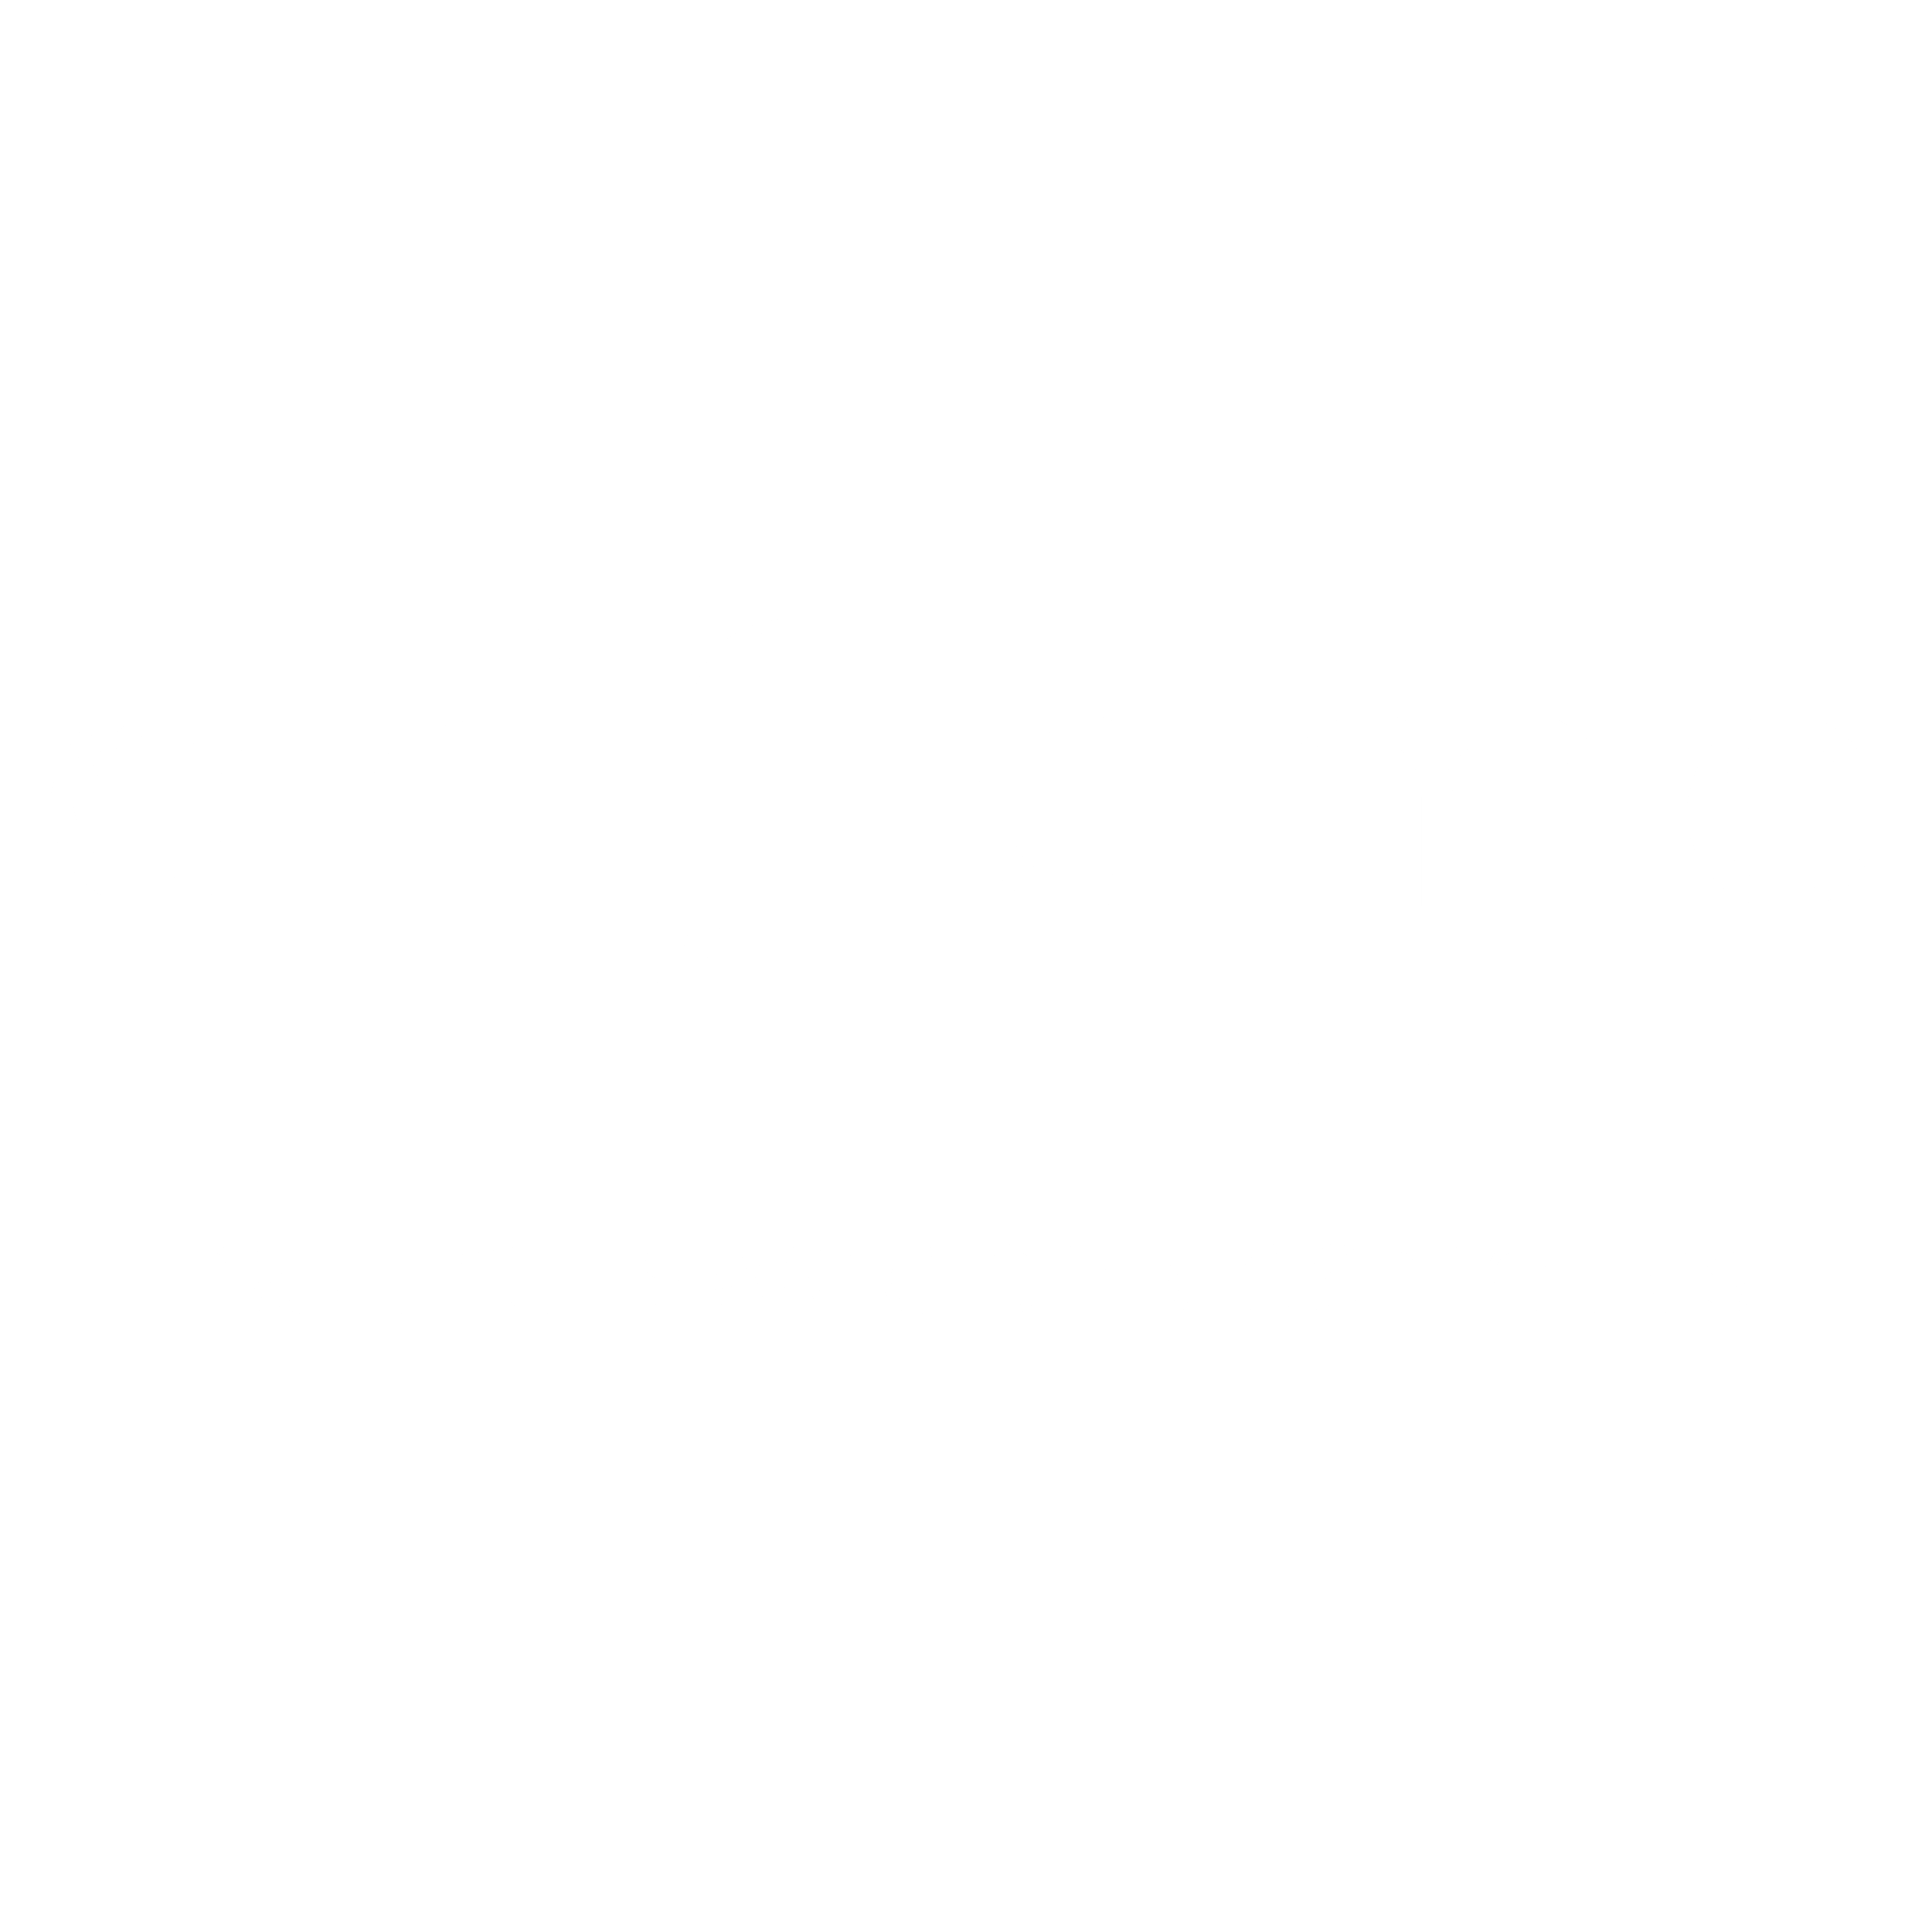 Oriflame Logo - Oriflame Logo PNG Transparent & SVG Vector - Freebie Supply